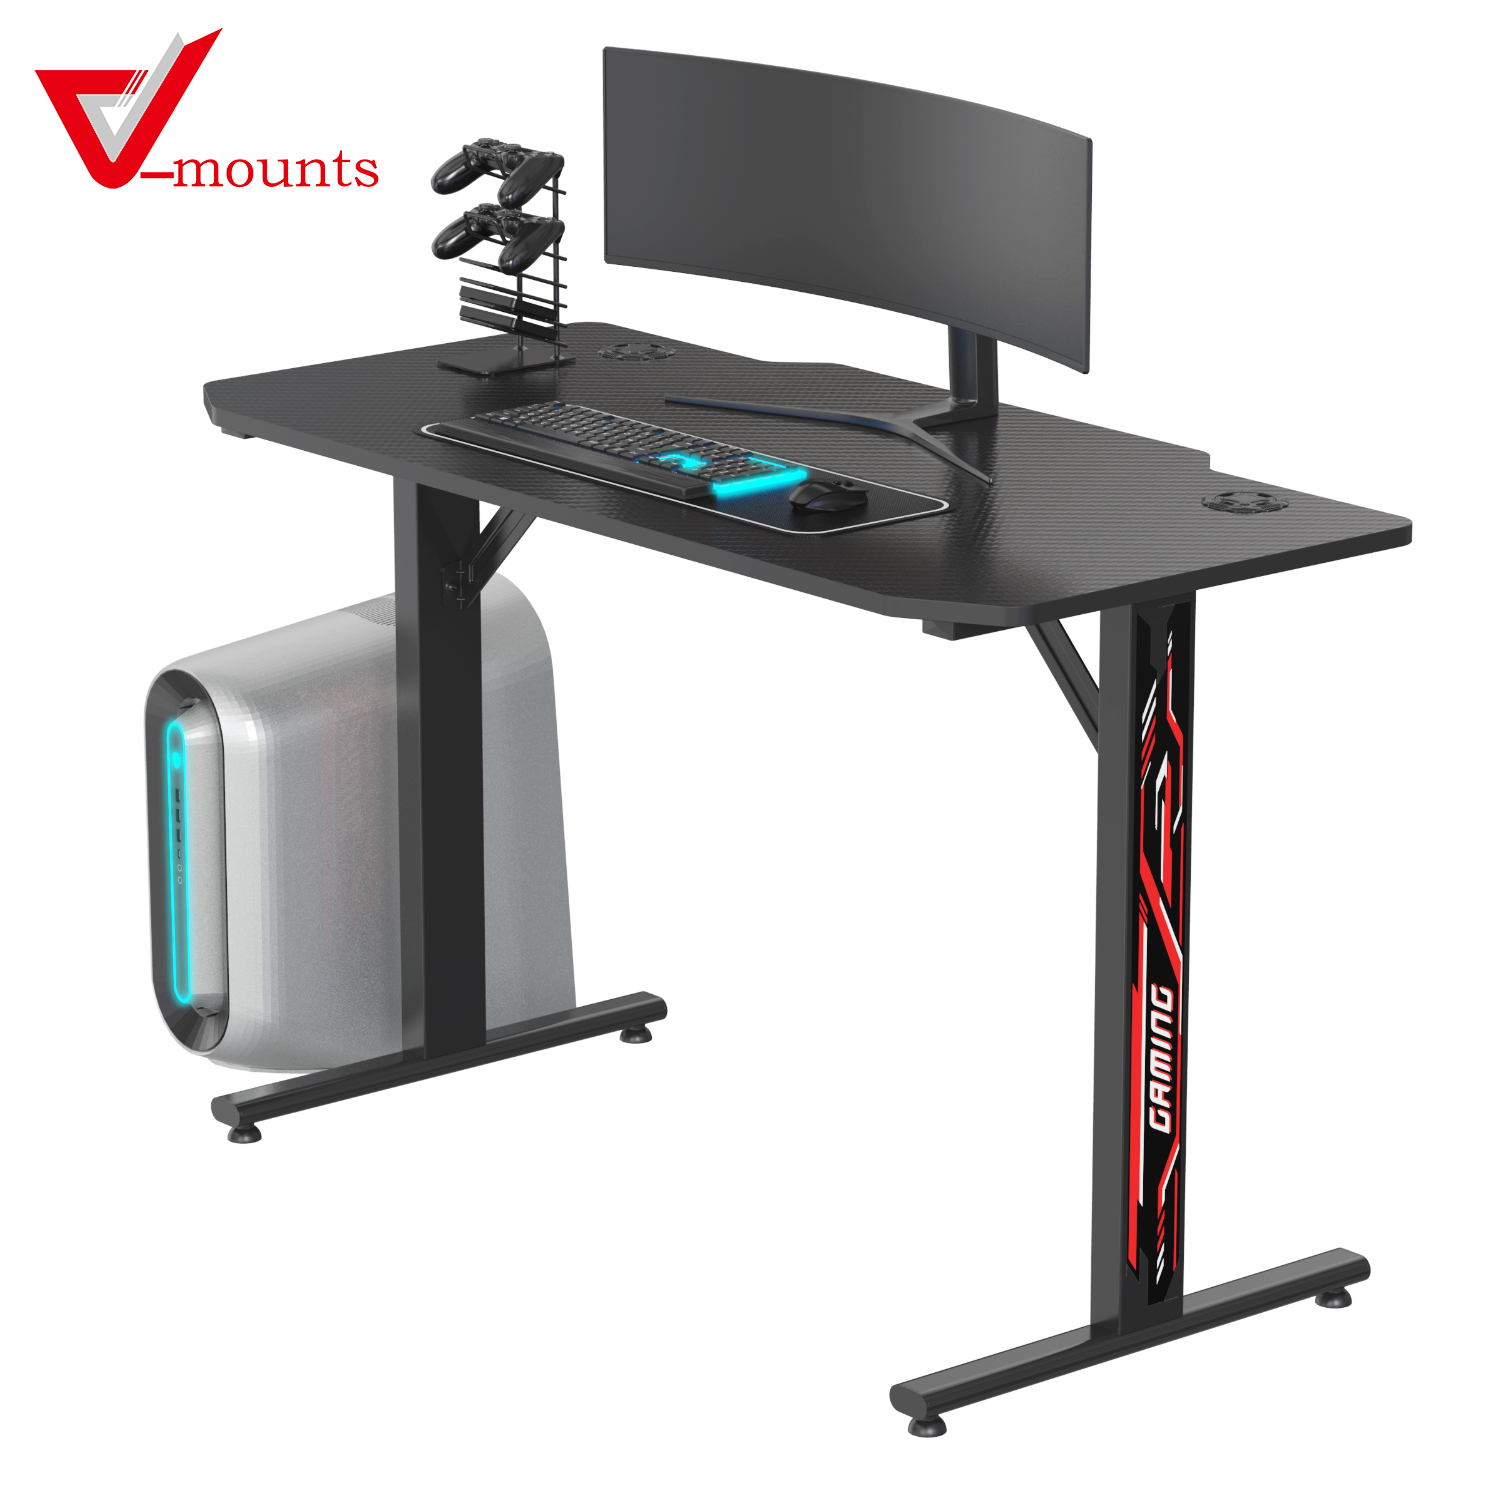 V-mounts SpaceErgo T Shaped Gaming Desk VM-GT03